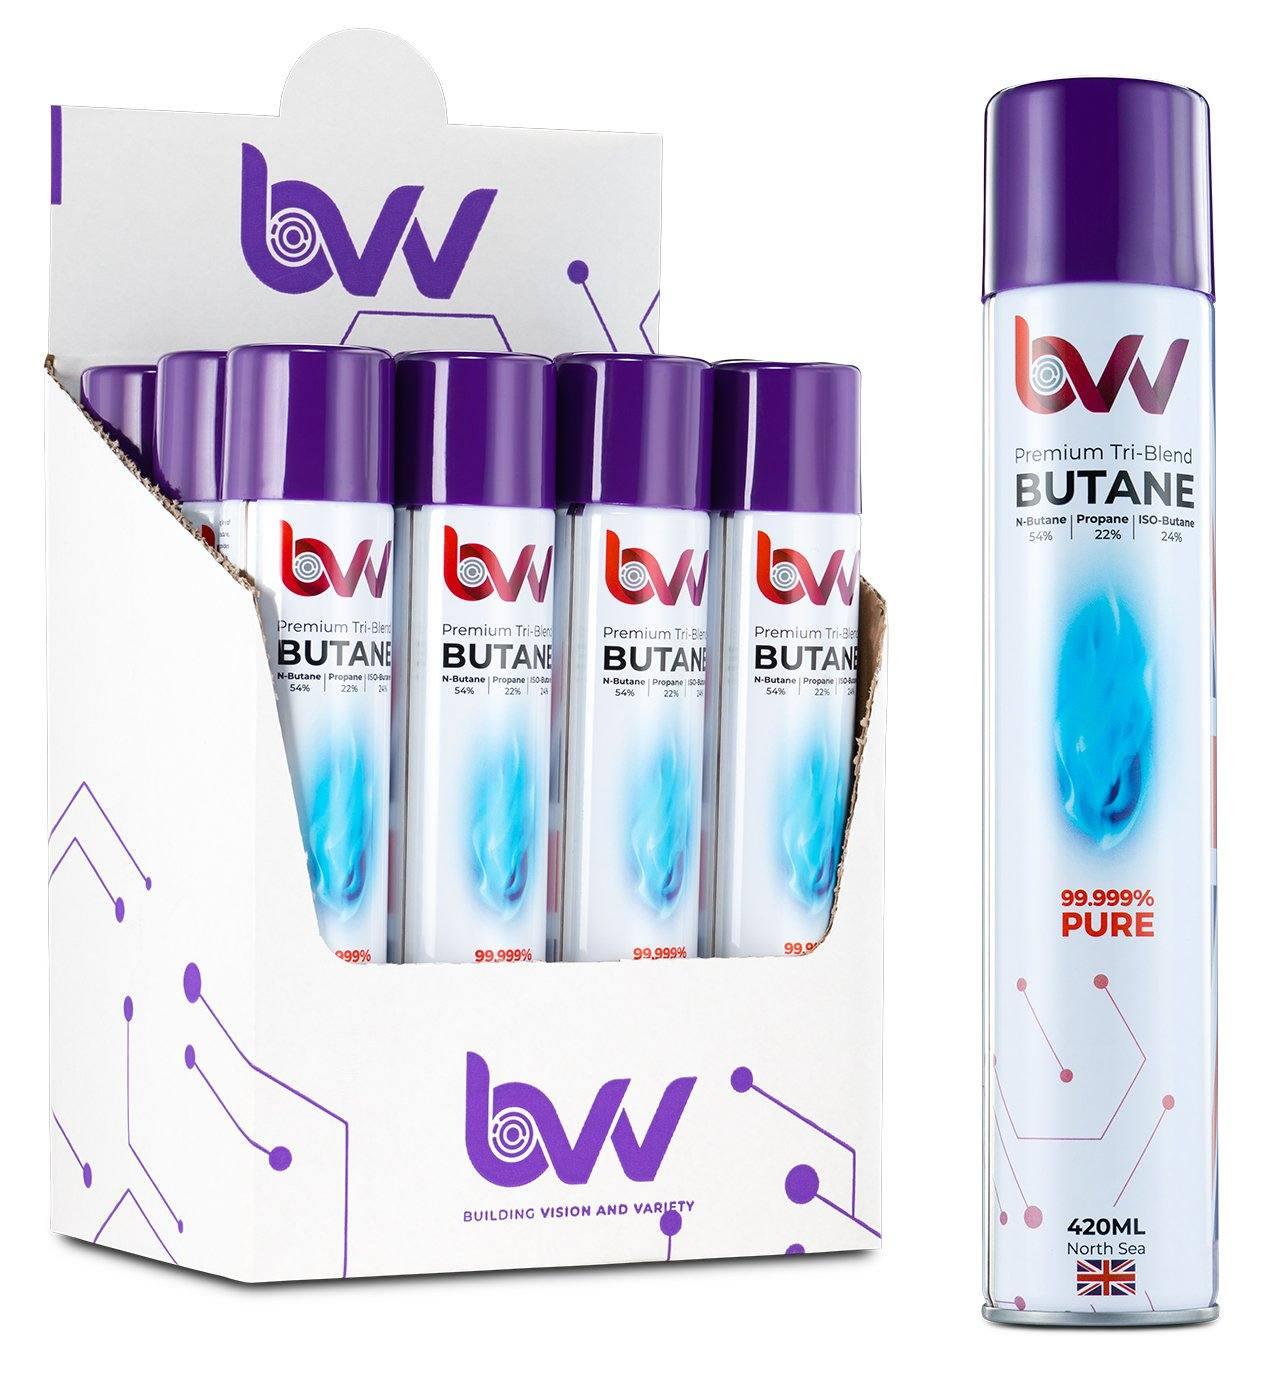 BVV™ 420ml Premium Tri-Blend Butane 99.999% Pure - BVV High Desert Scientific